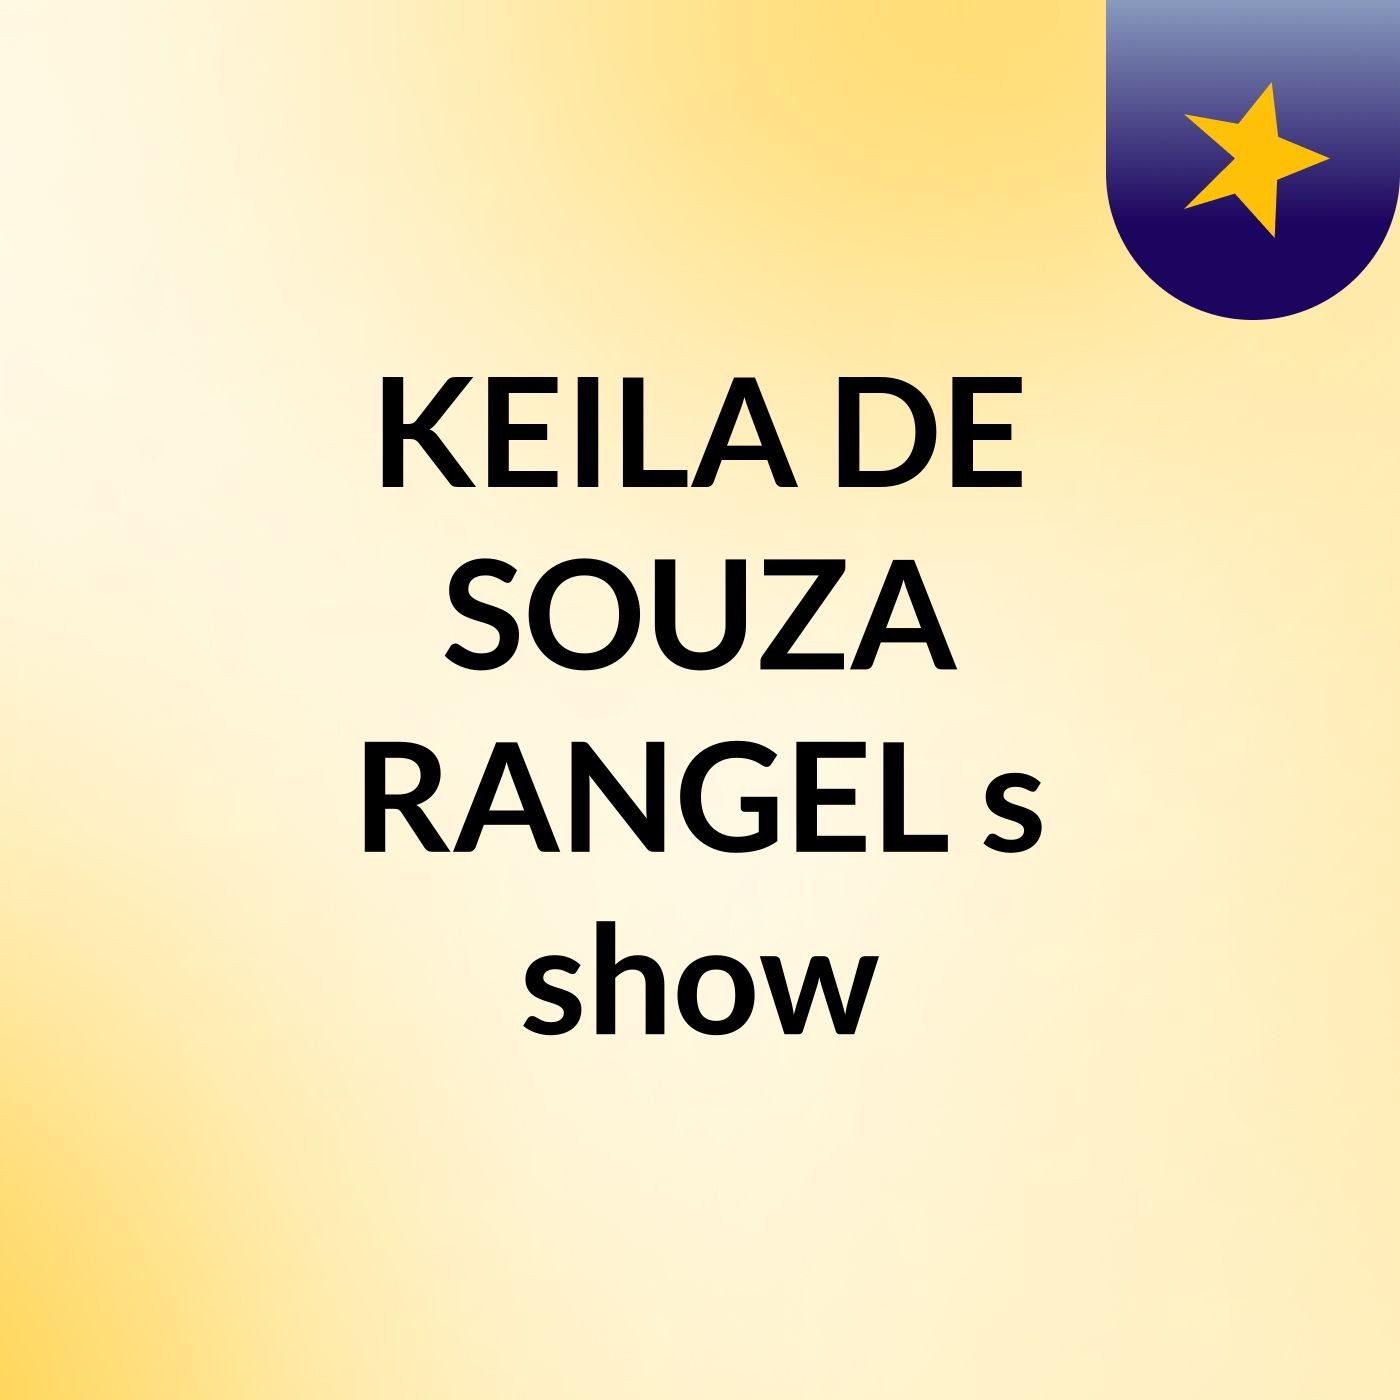 KEILA DE SOUZA RANGEL's show